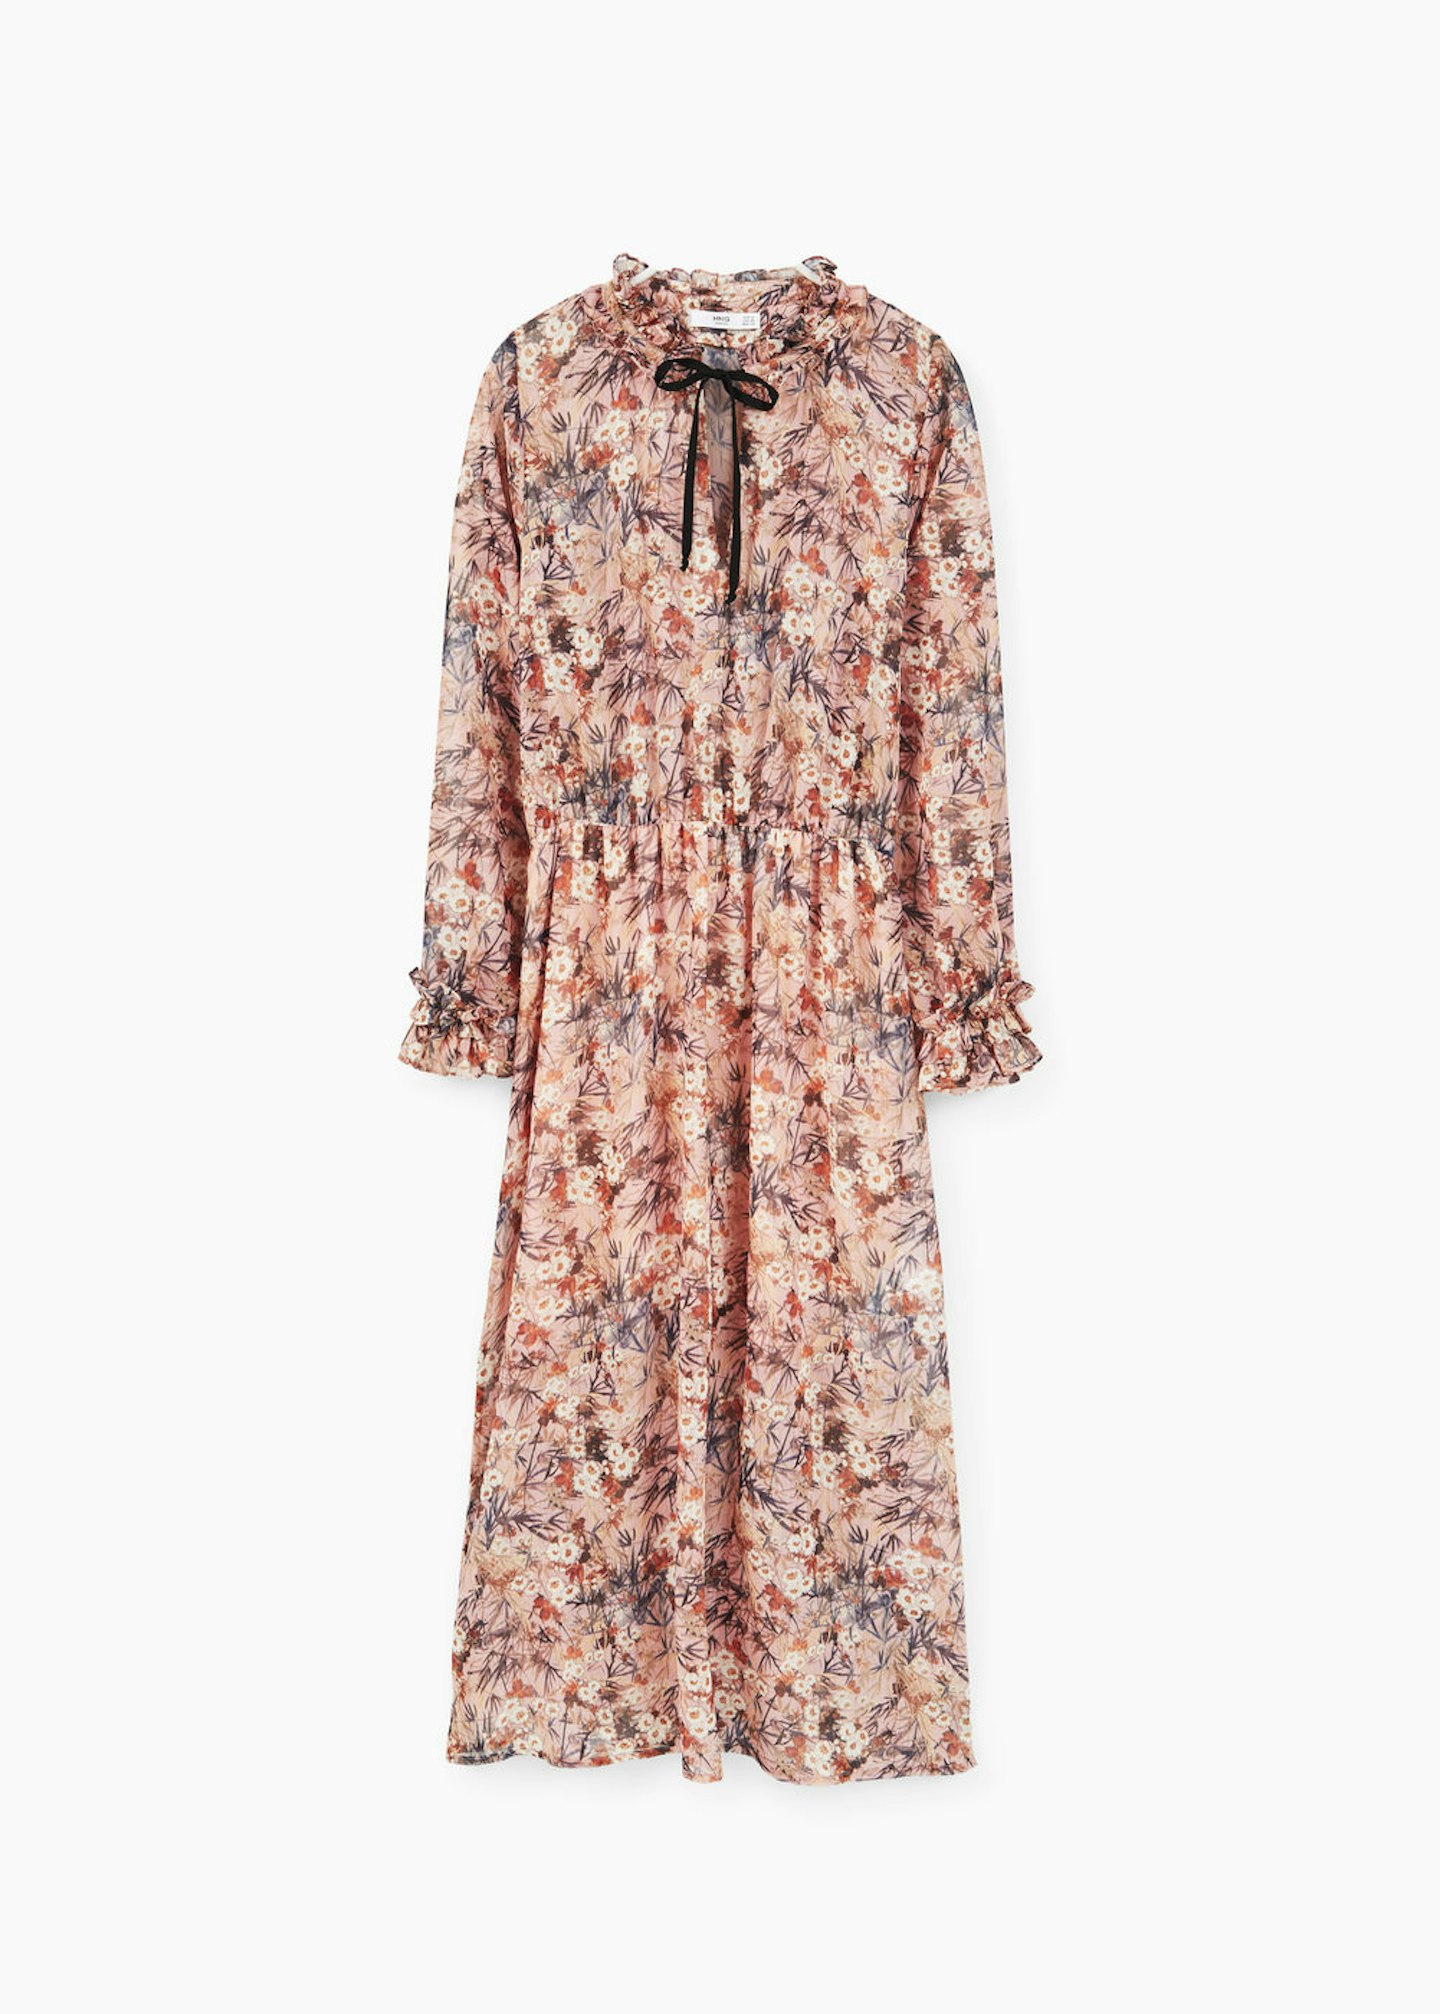 Boho Style Floral Midi Dress, £39.99, [Mango](http://shop.mango.com/GB/p0/woman/clothing/dresses/midi/floral-print-dress/?id=63033045)